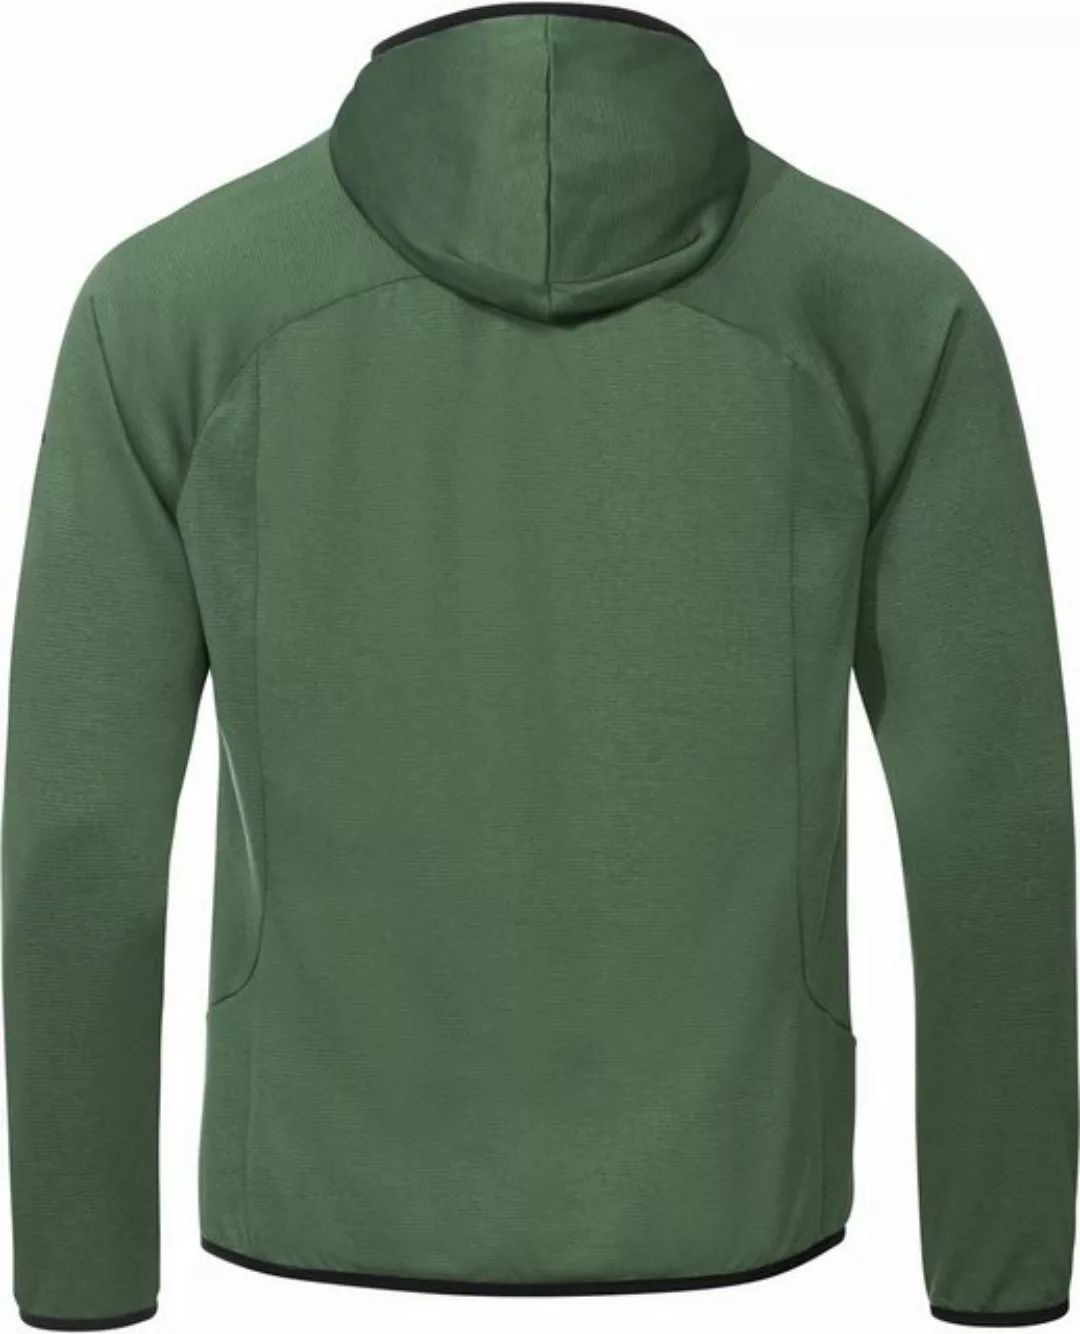 VAUDE Fleecejacke Tekoa Fleece Jacket II mit langen Ärmeln günstig online kaufen